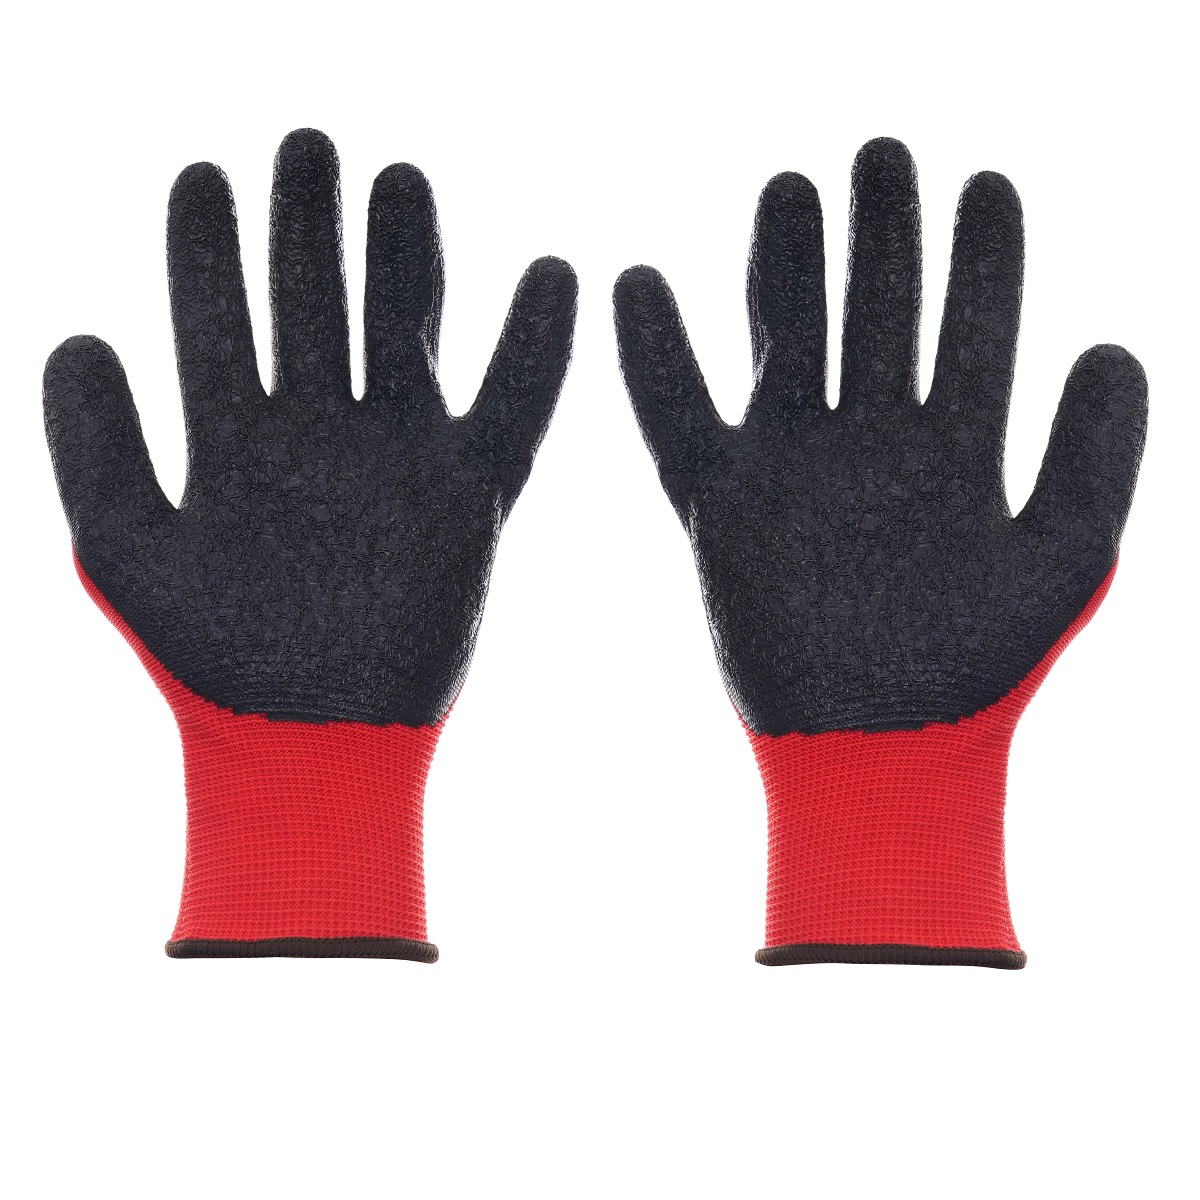 www.toroz.eu Gloves